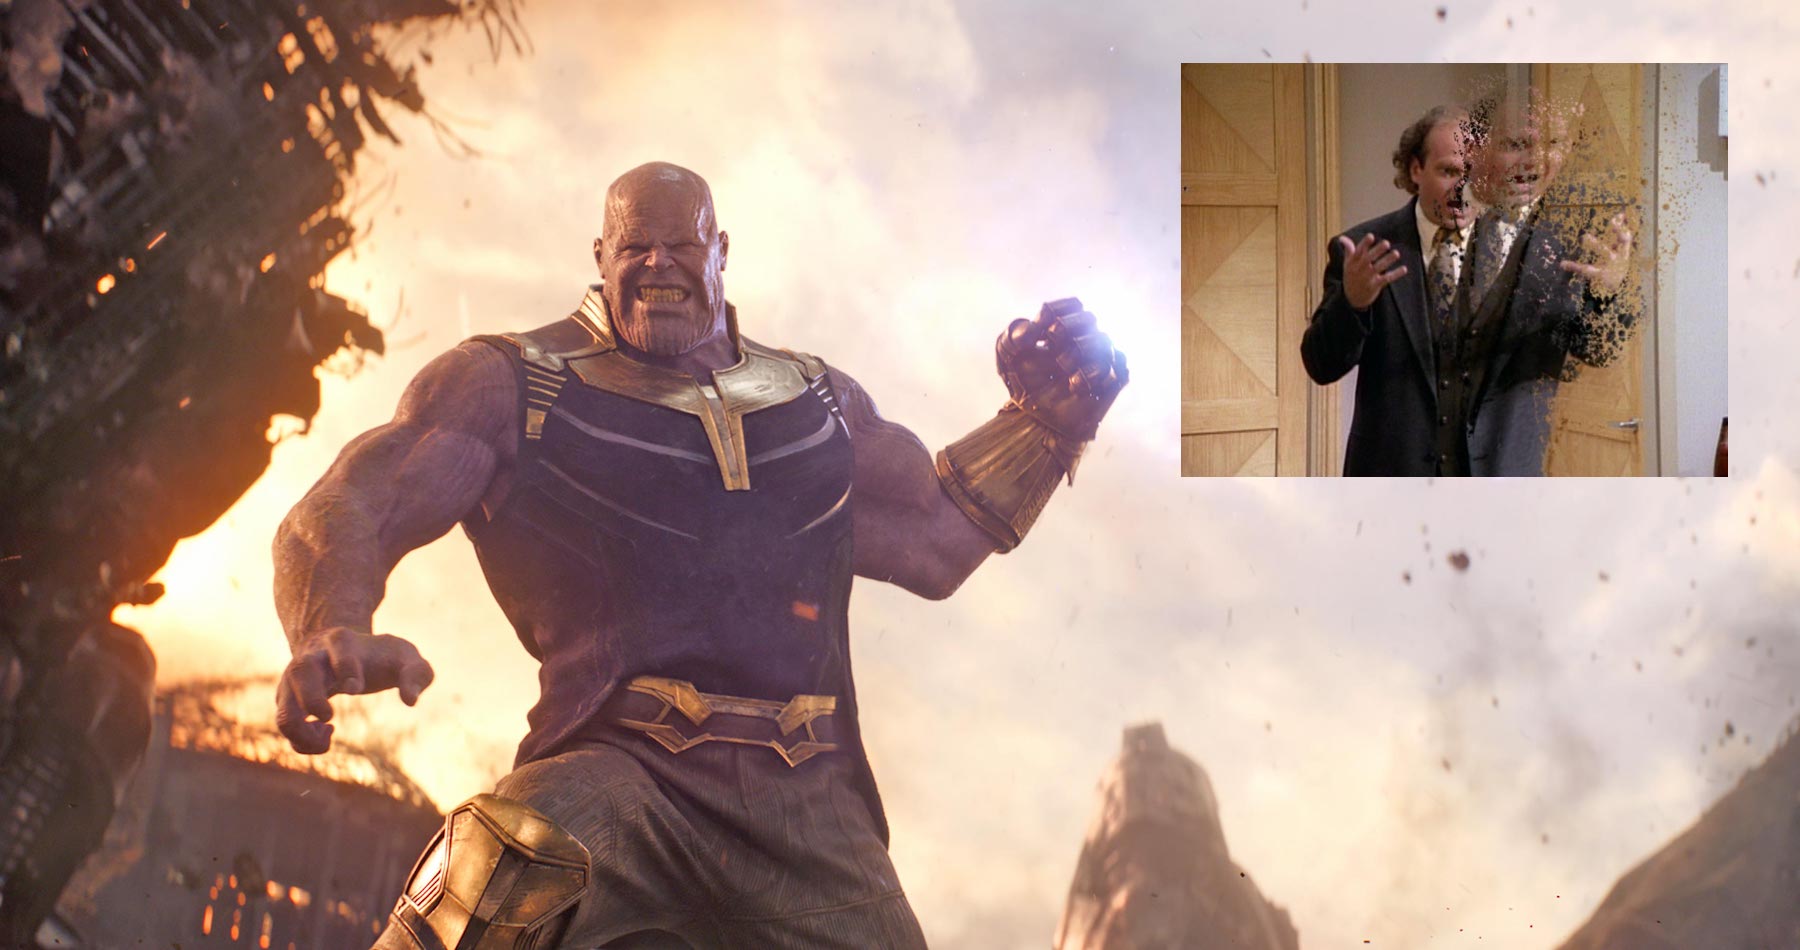 Avengers Infinity War Disintegration Meme Makes Fun Of The Darkest